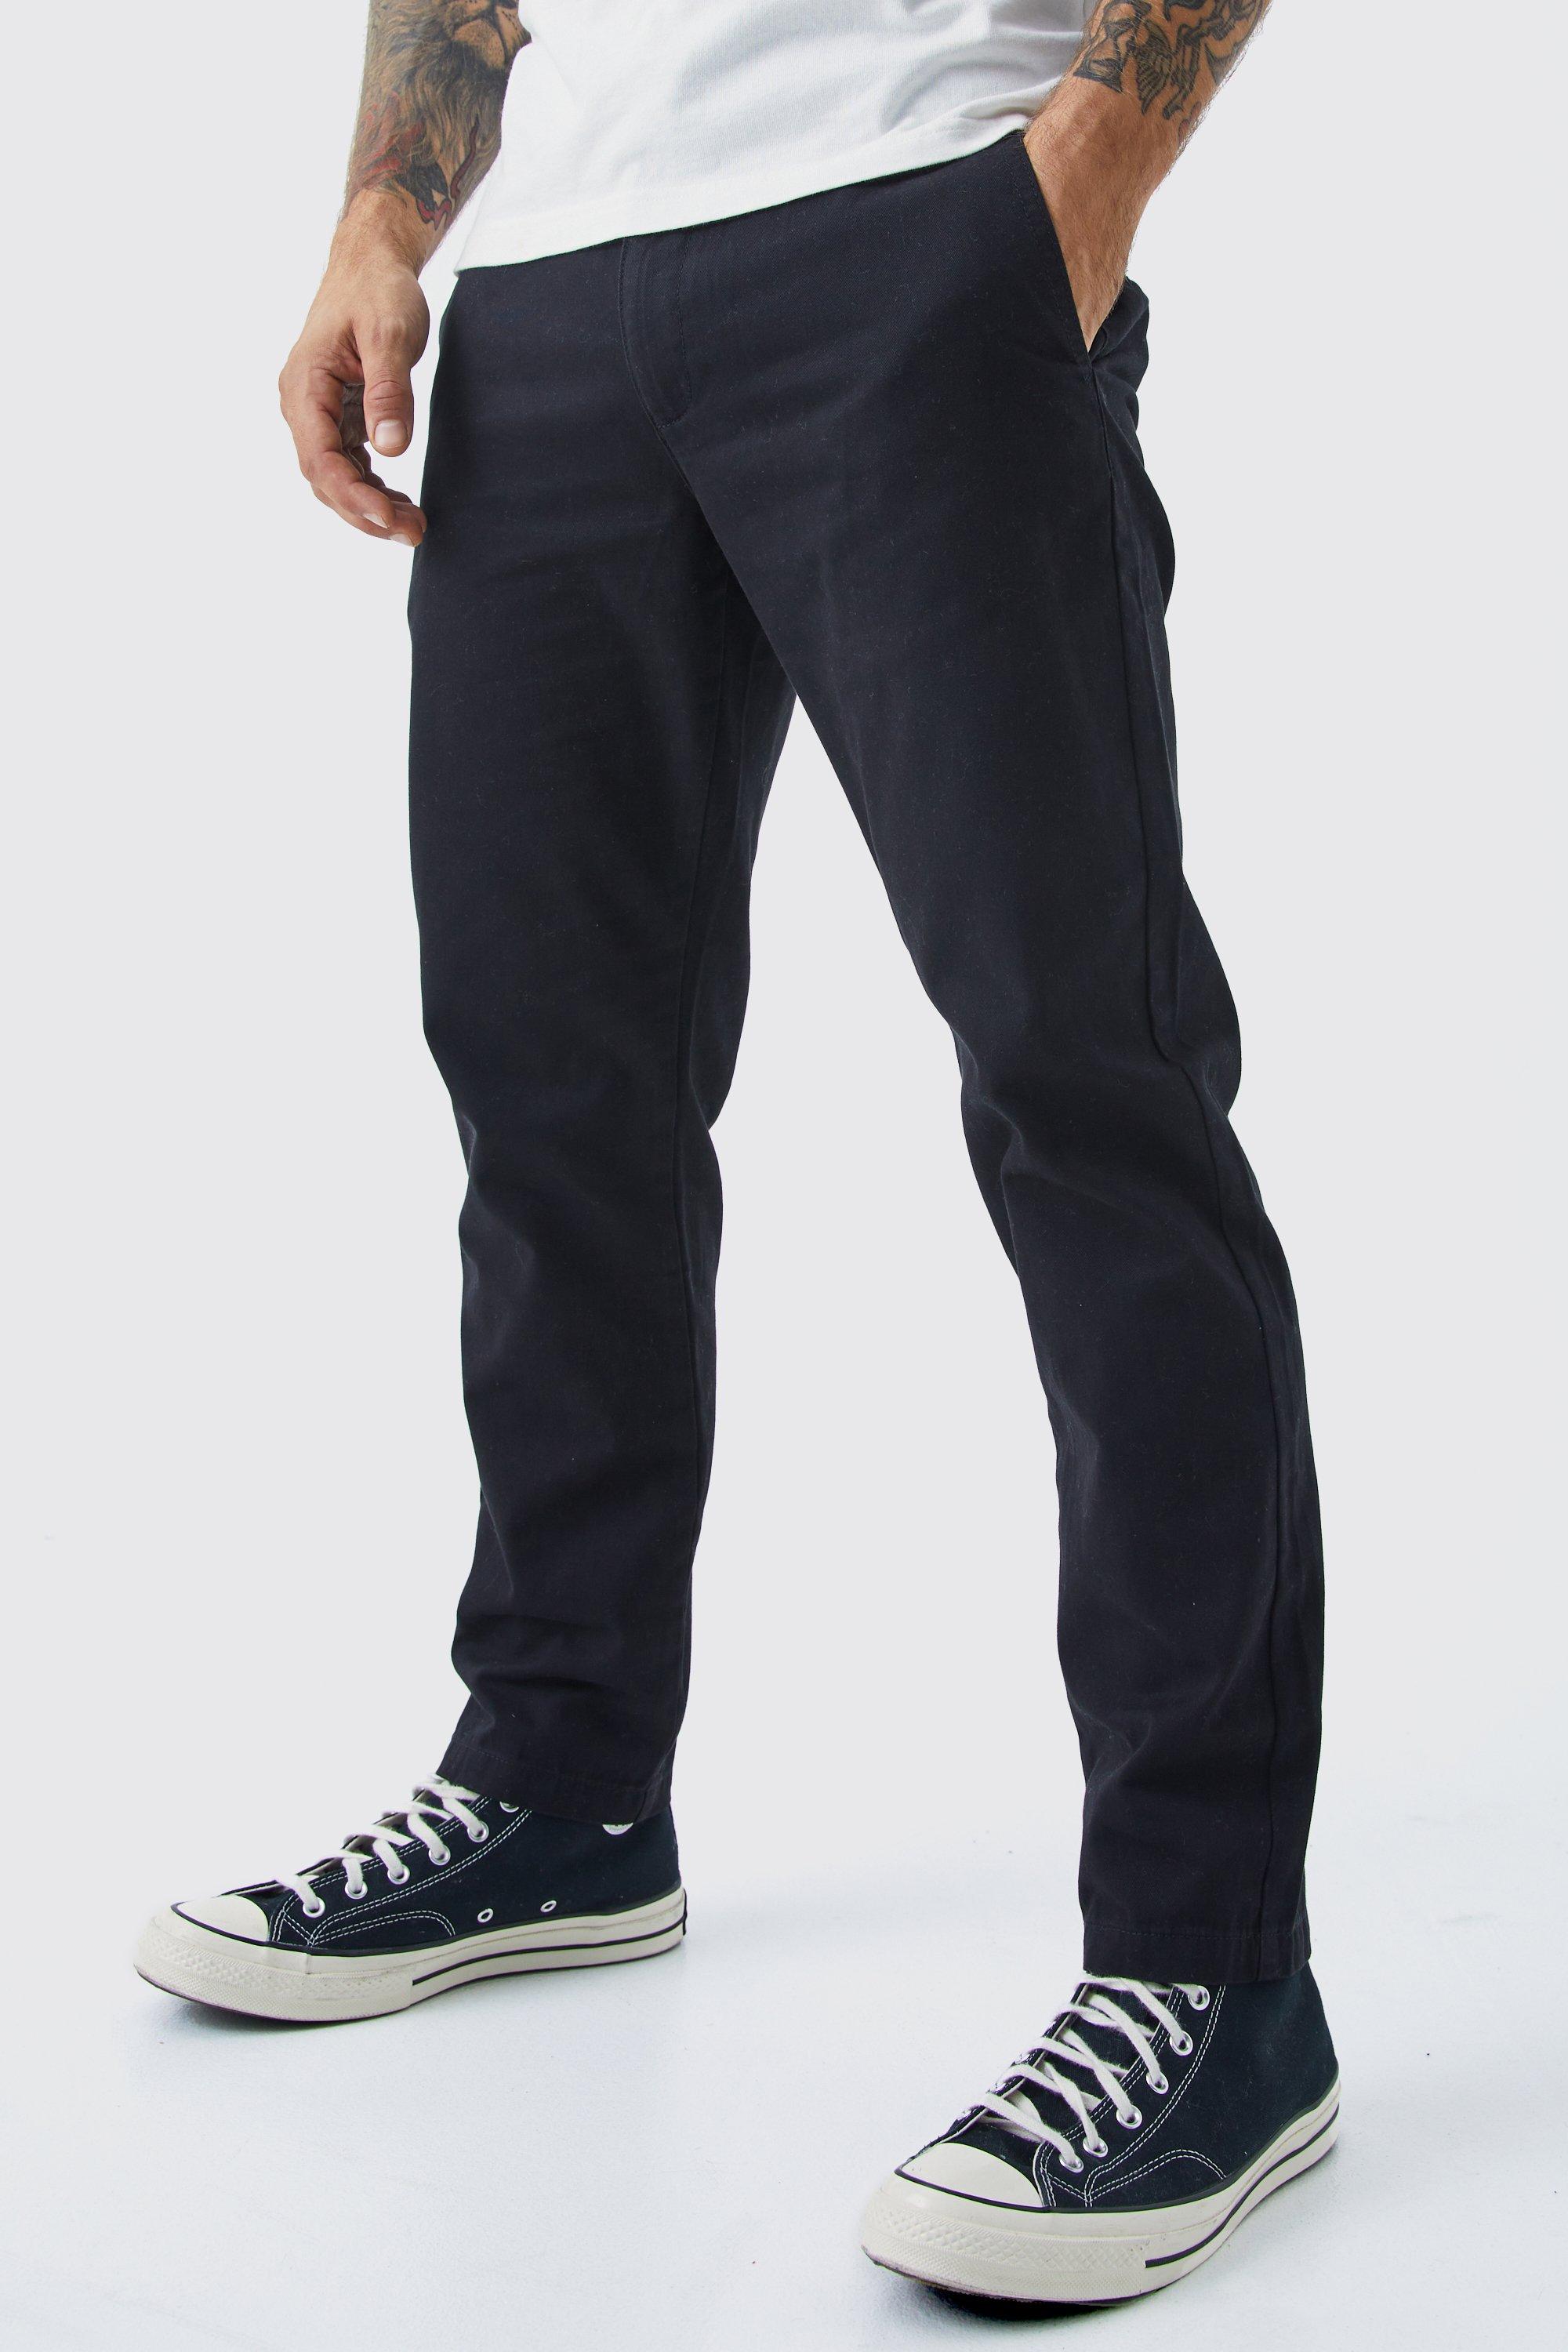 pantalon chino slim court homme - noir - 28, noir